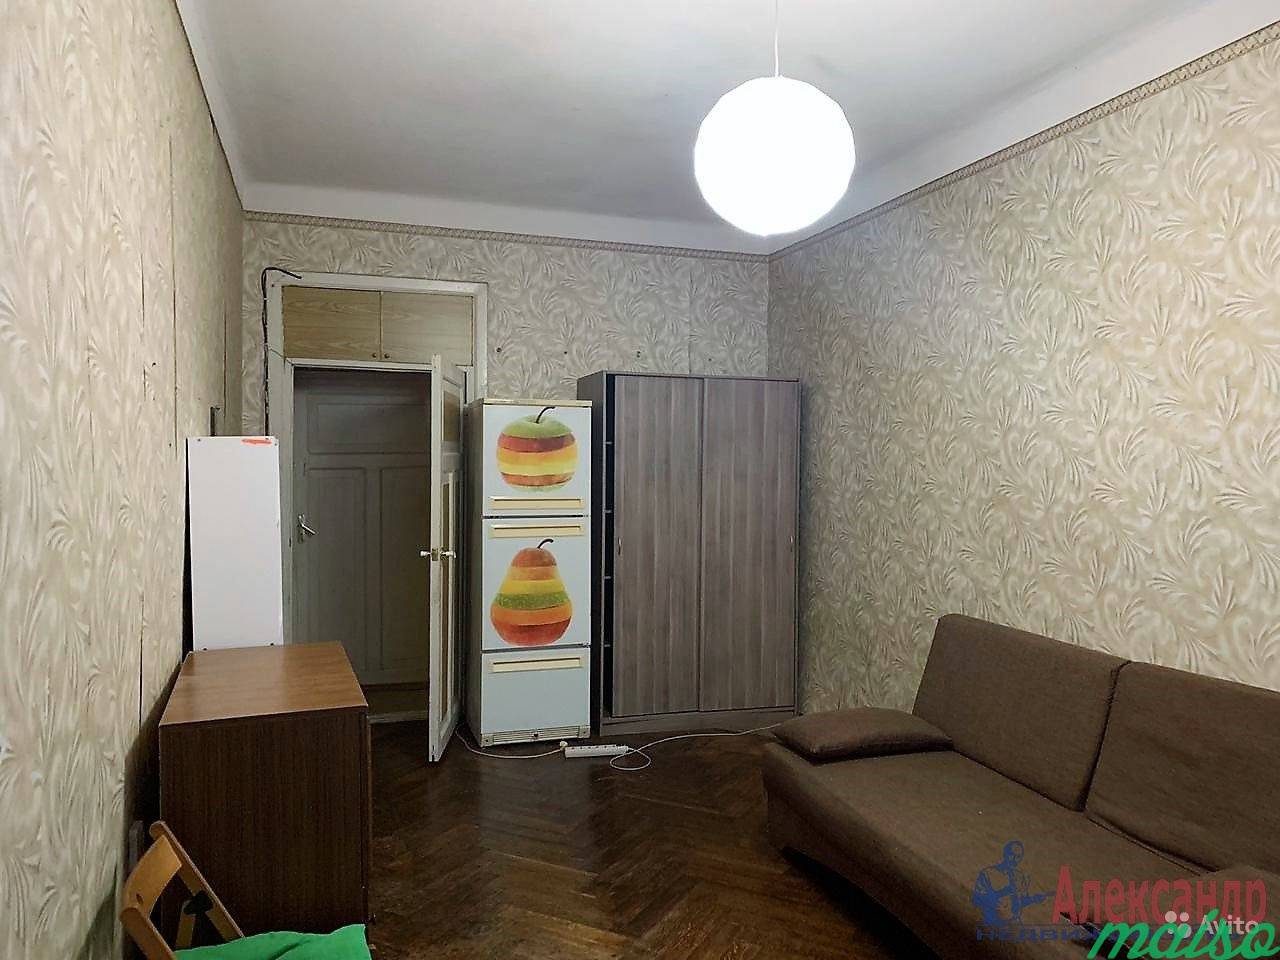 Комната 37 м² в 4-к, 4/6 эт. в Санкт-Петербурге. Фото 3